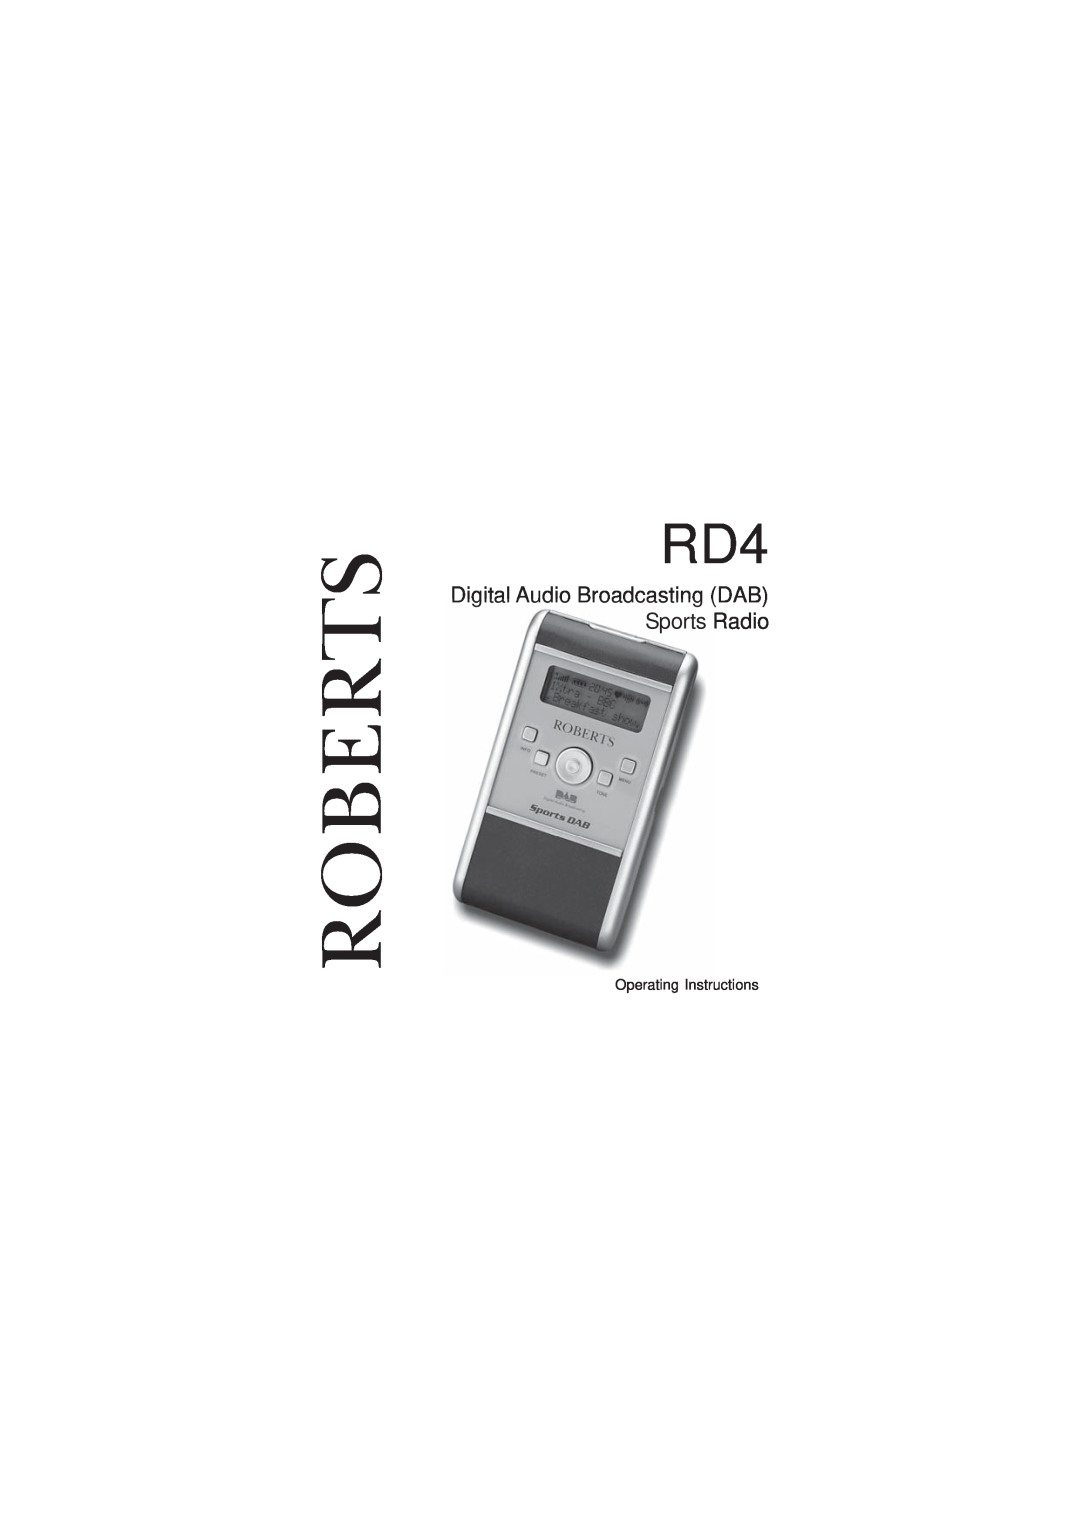 Roberts Radio RD4 manual Roberts, Digital Audio Broadcasting DAB Sports Radio 